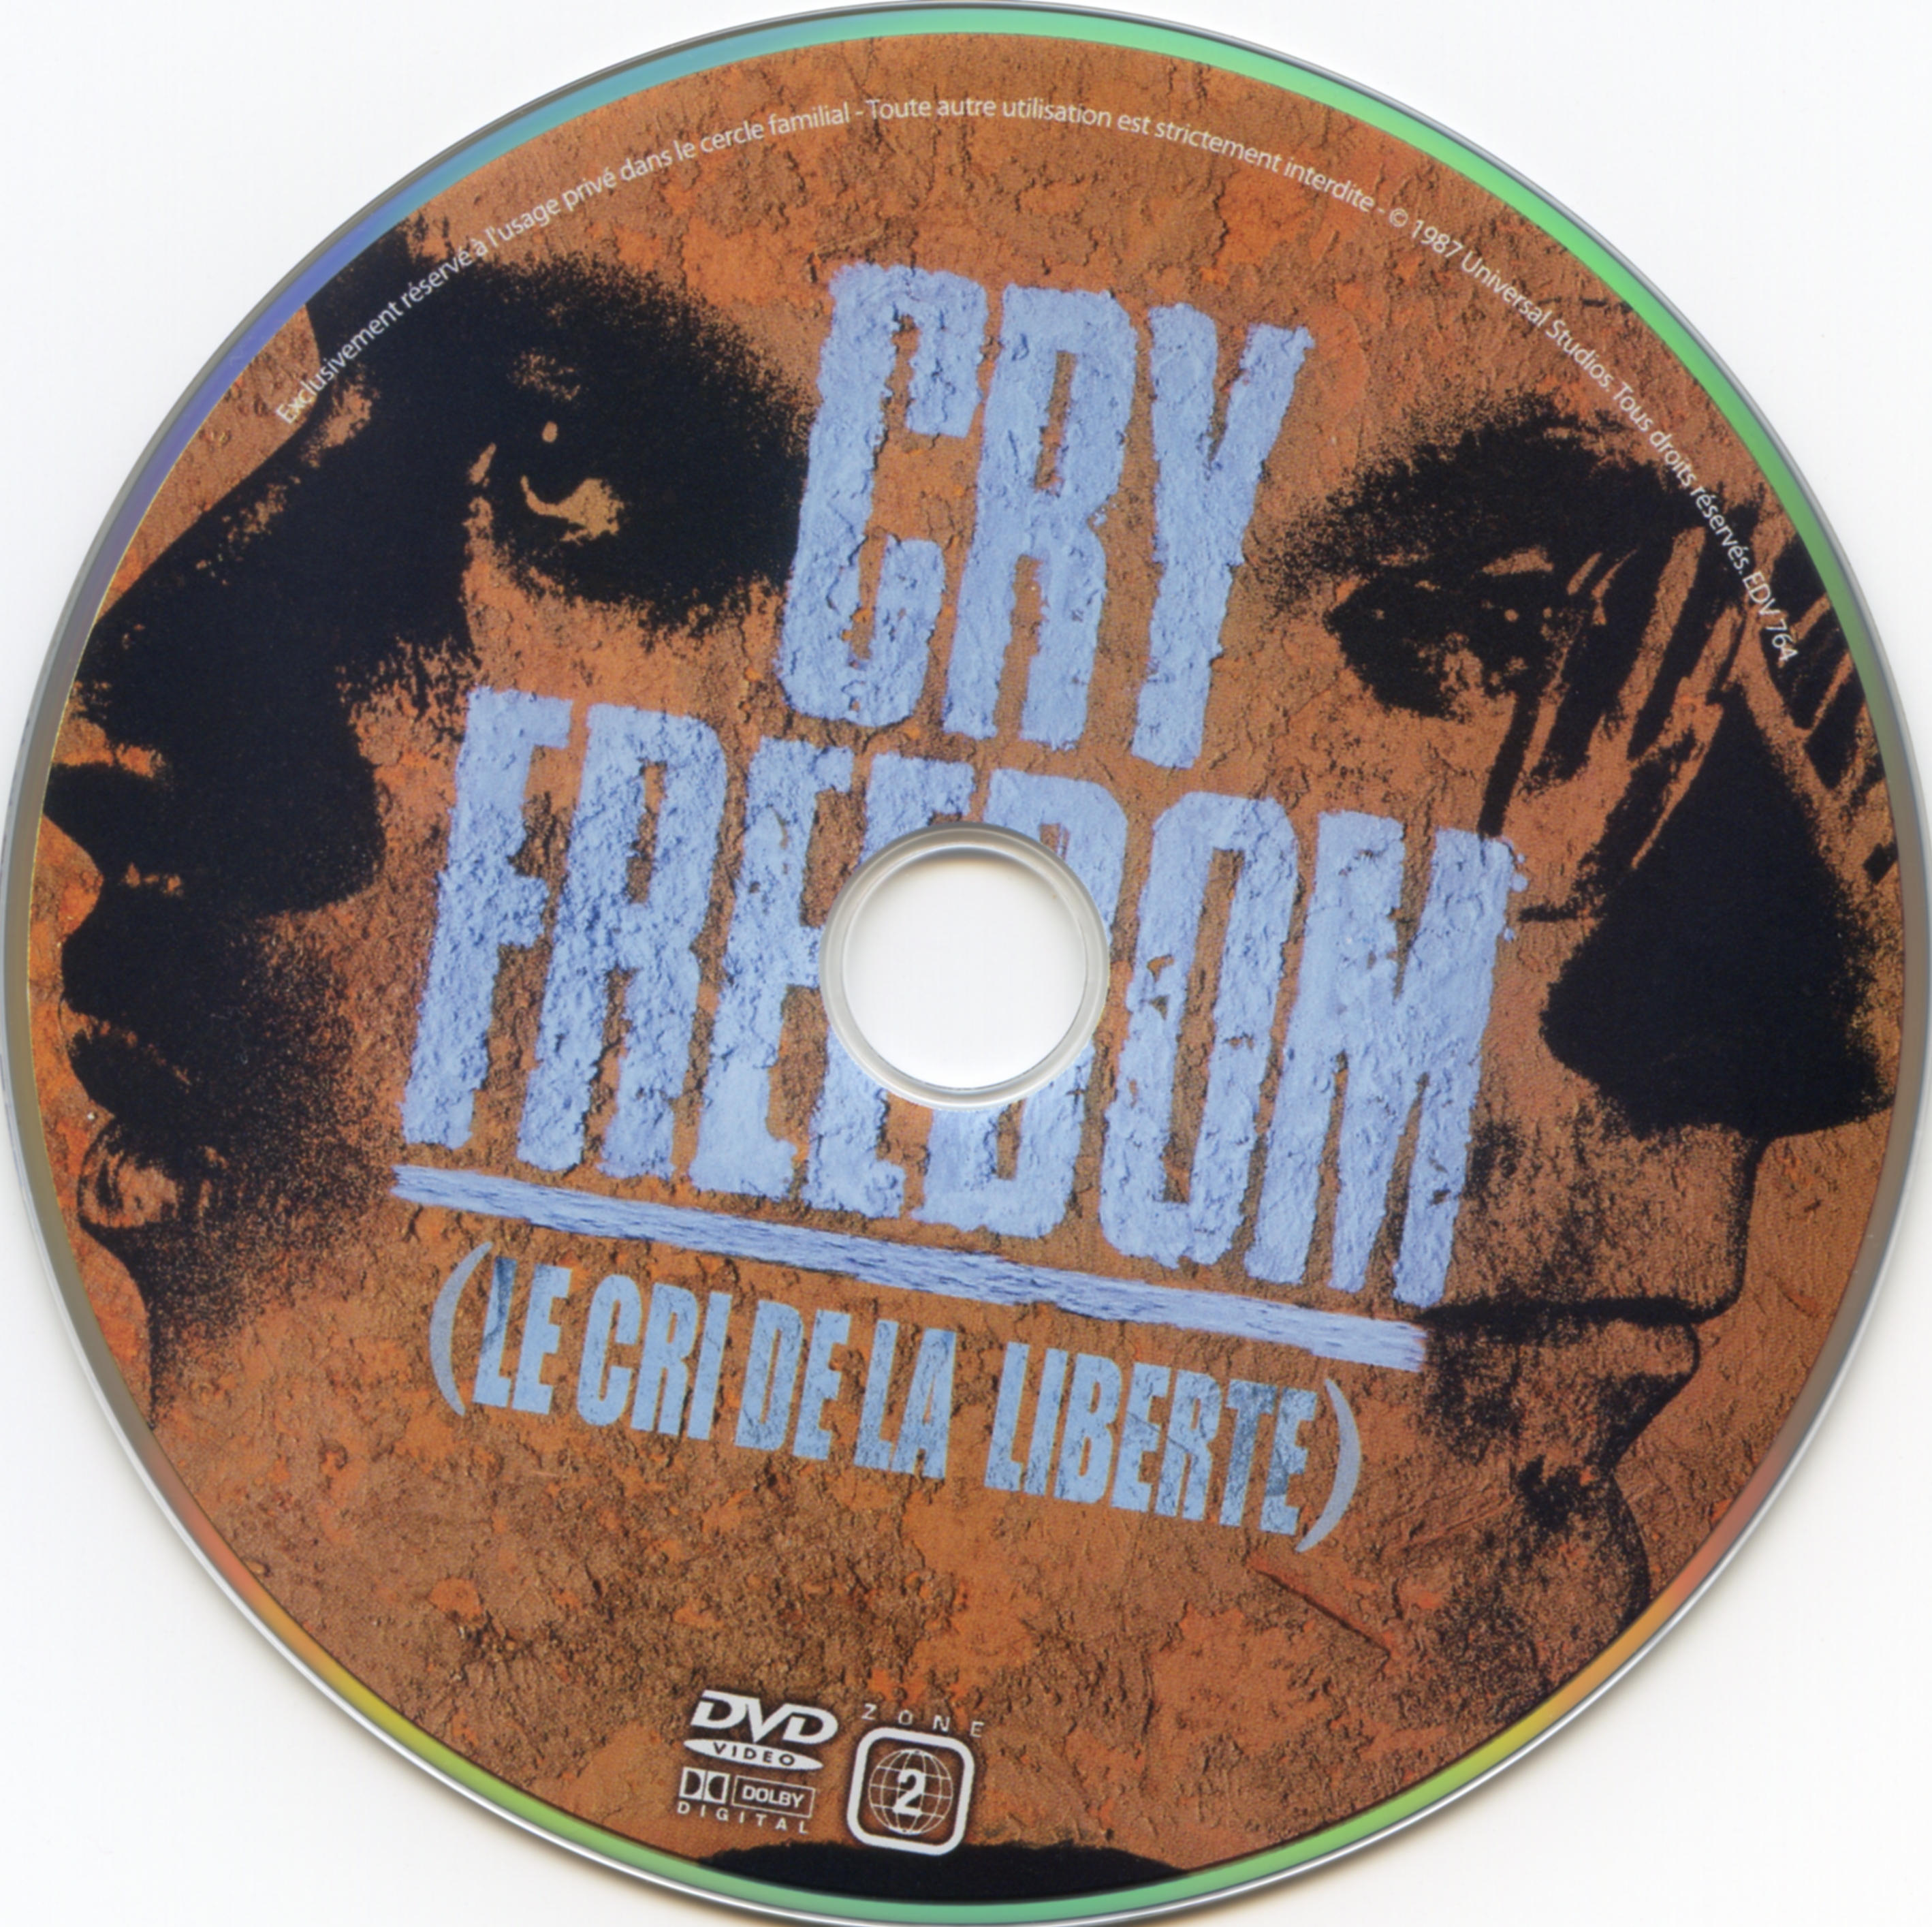 Cry freedom